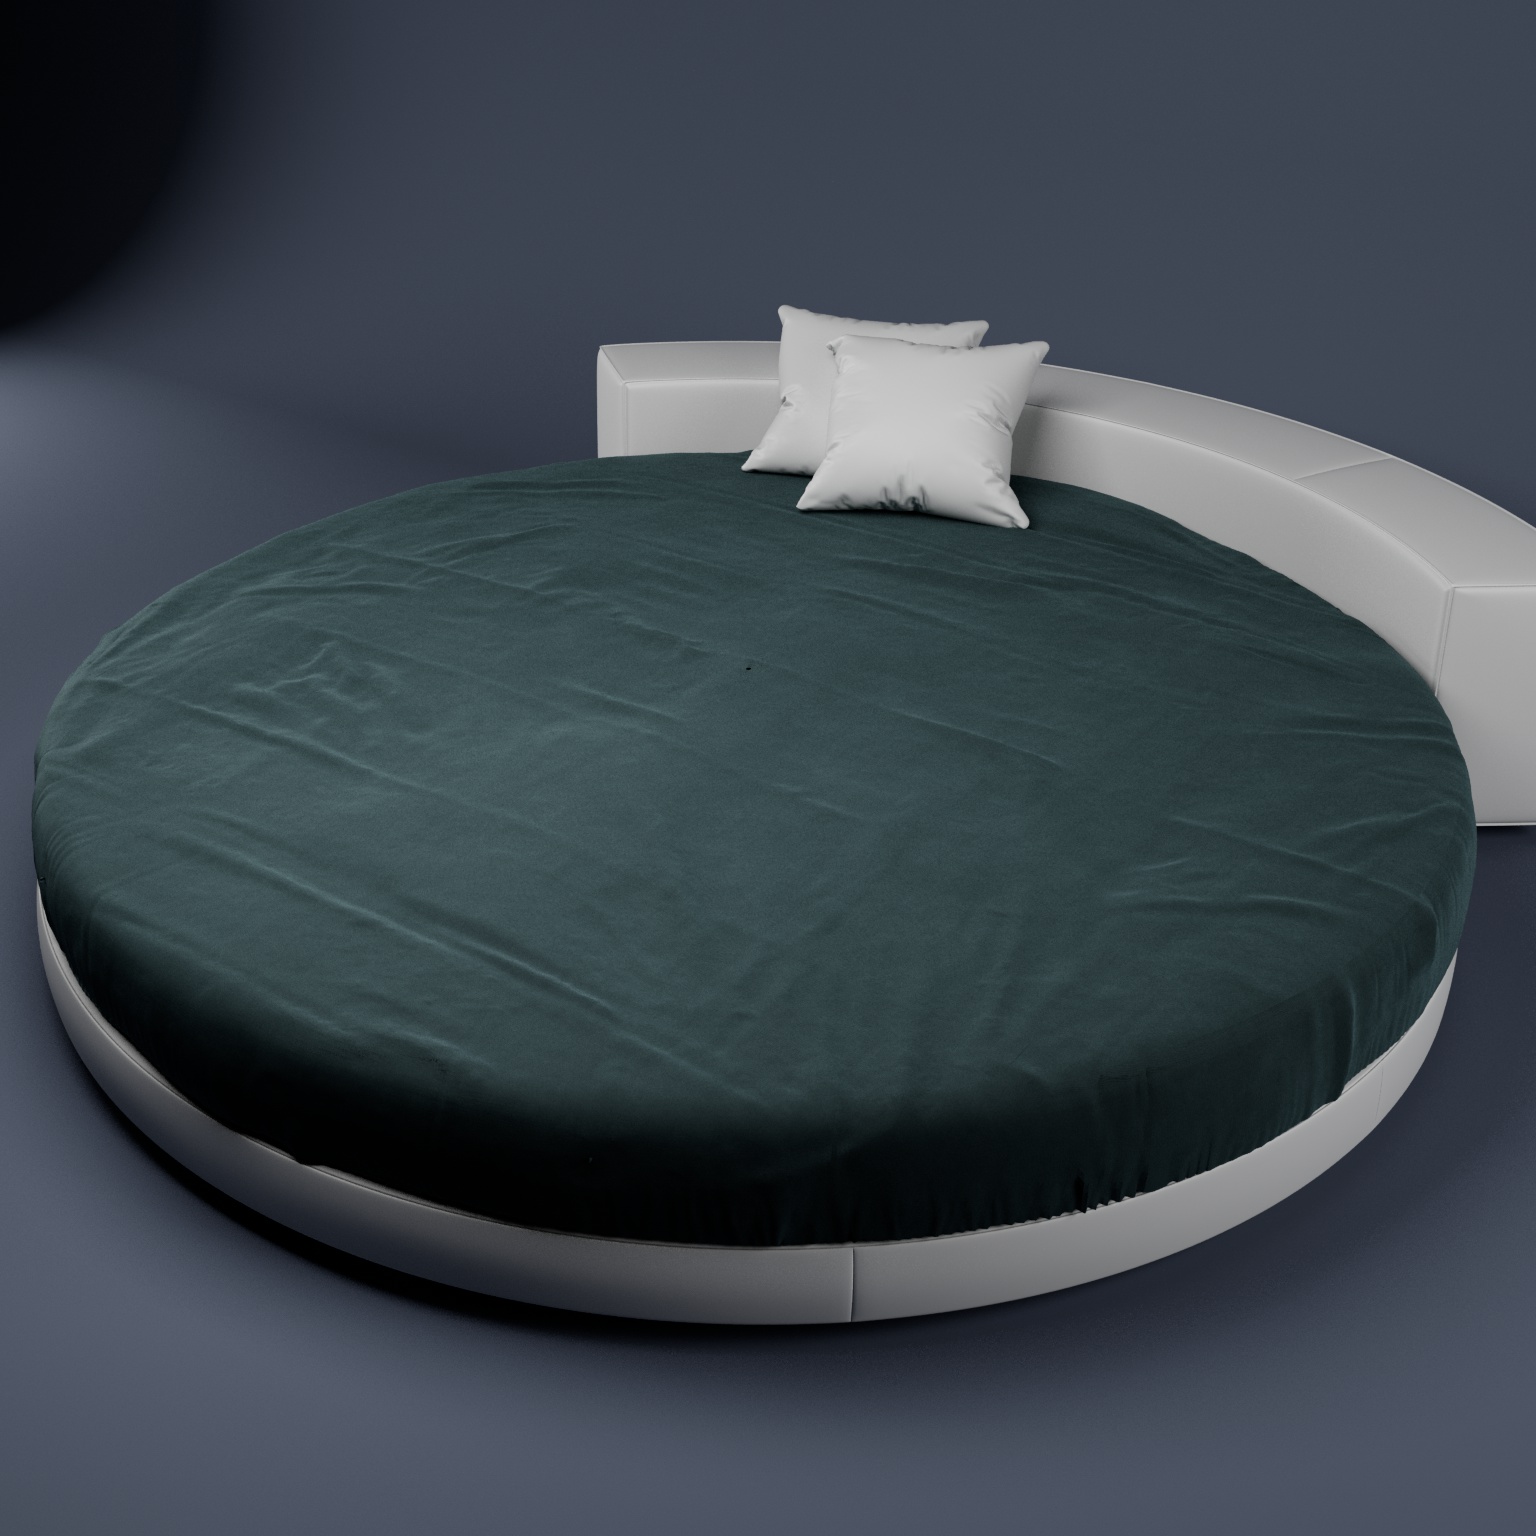 Bed Sheets test.jpg